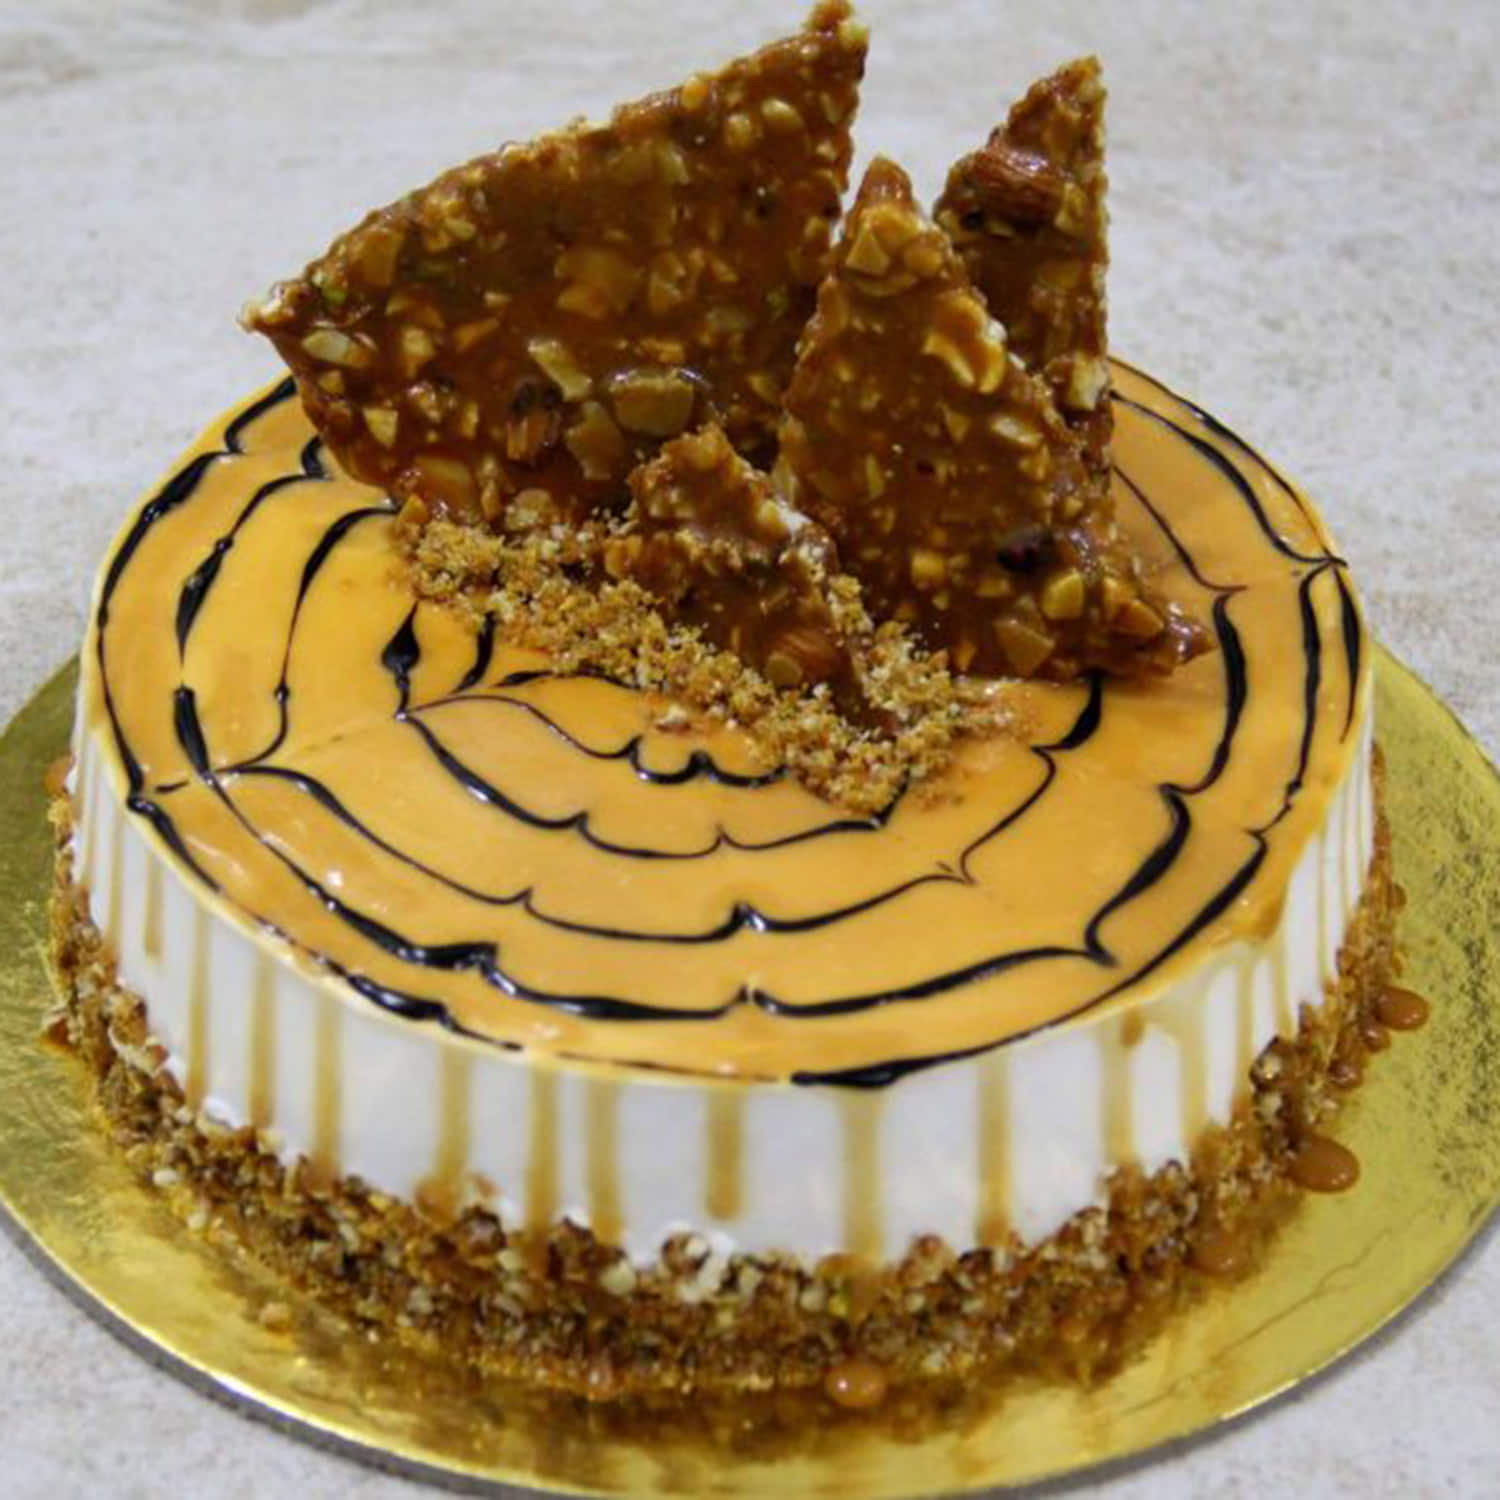 Online Birthday Cake Delivery Send Cakes to Delhi NCR Sameday & Midnight